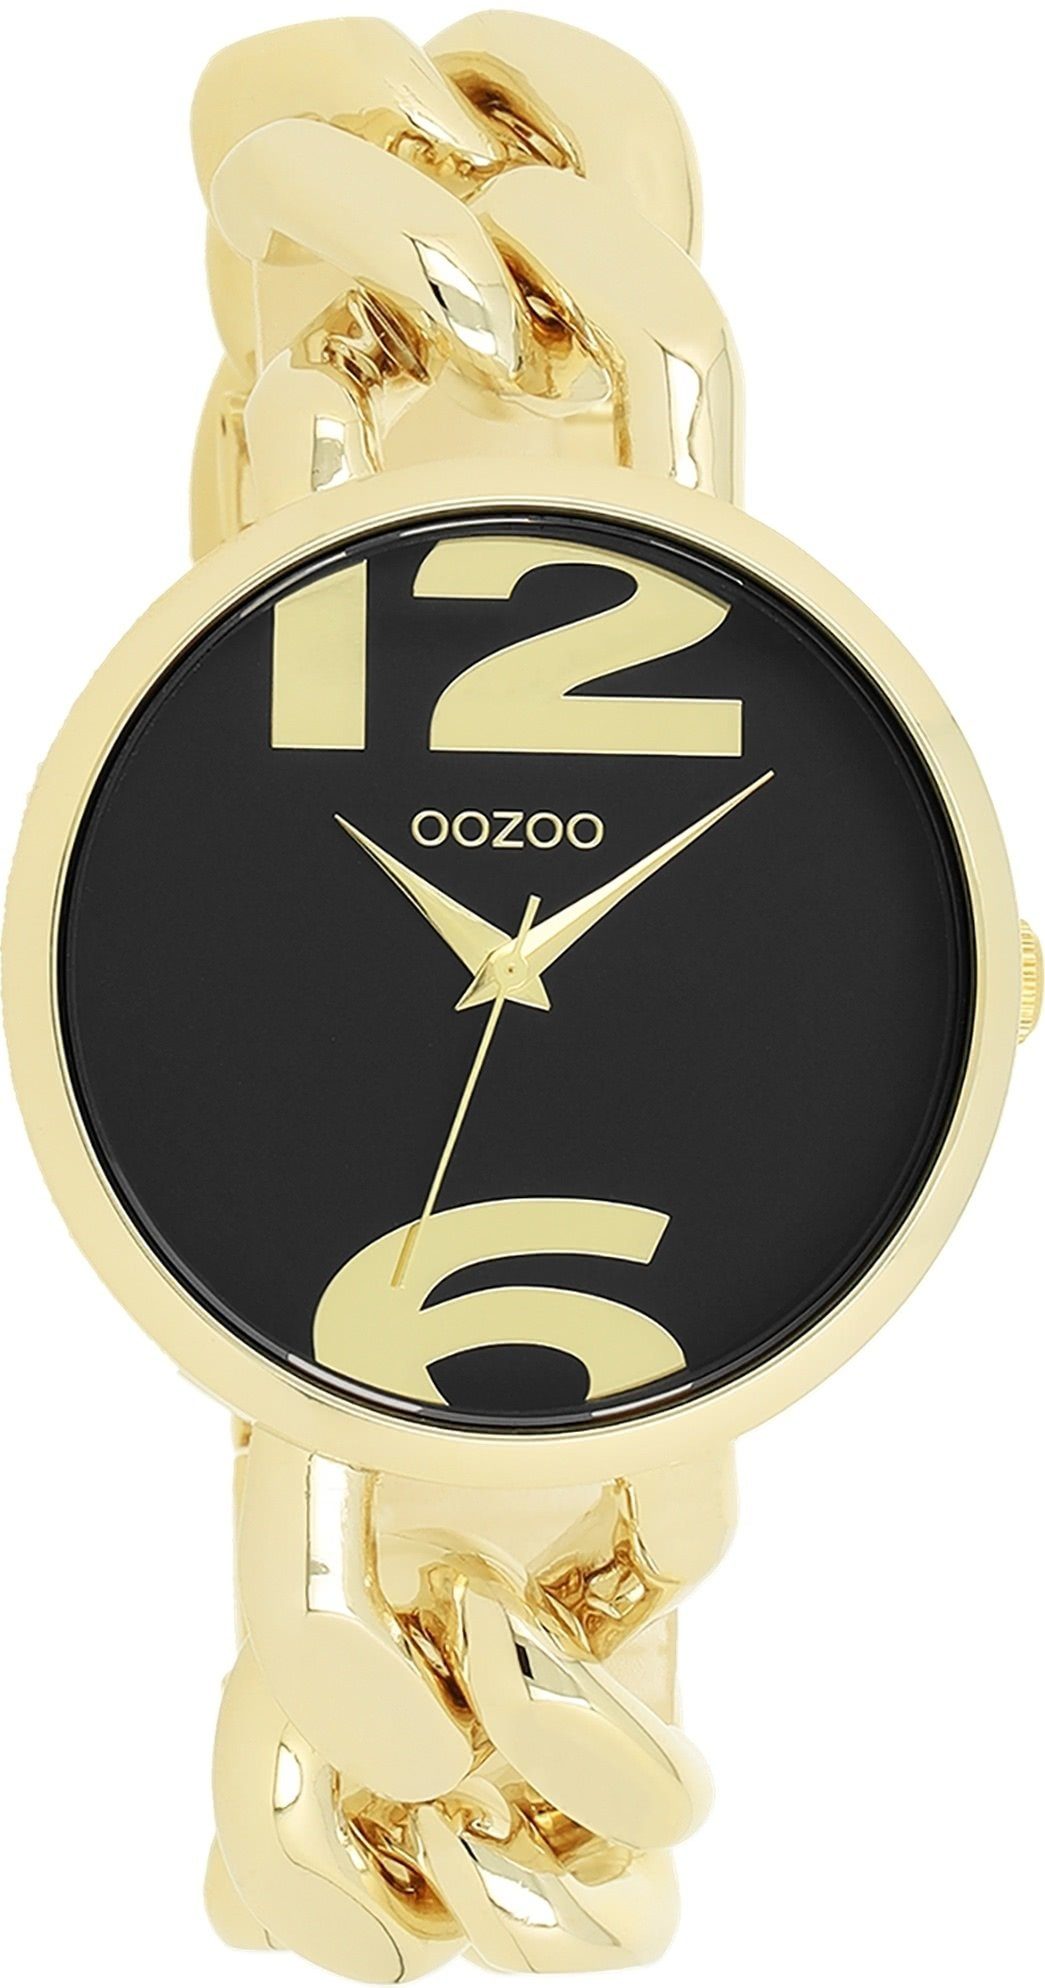 Damenuhr Timepieces Quarzuhr numbers groß Indizes: Fashion-Style, (ca. rund, Oozoo OOZOO 40mm) Analog, Metallarmband, Armbanduhr Damen